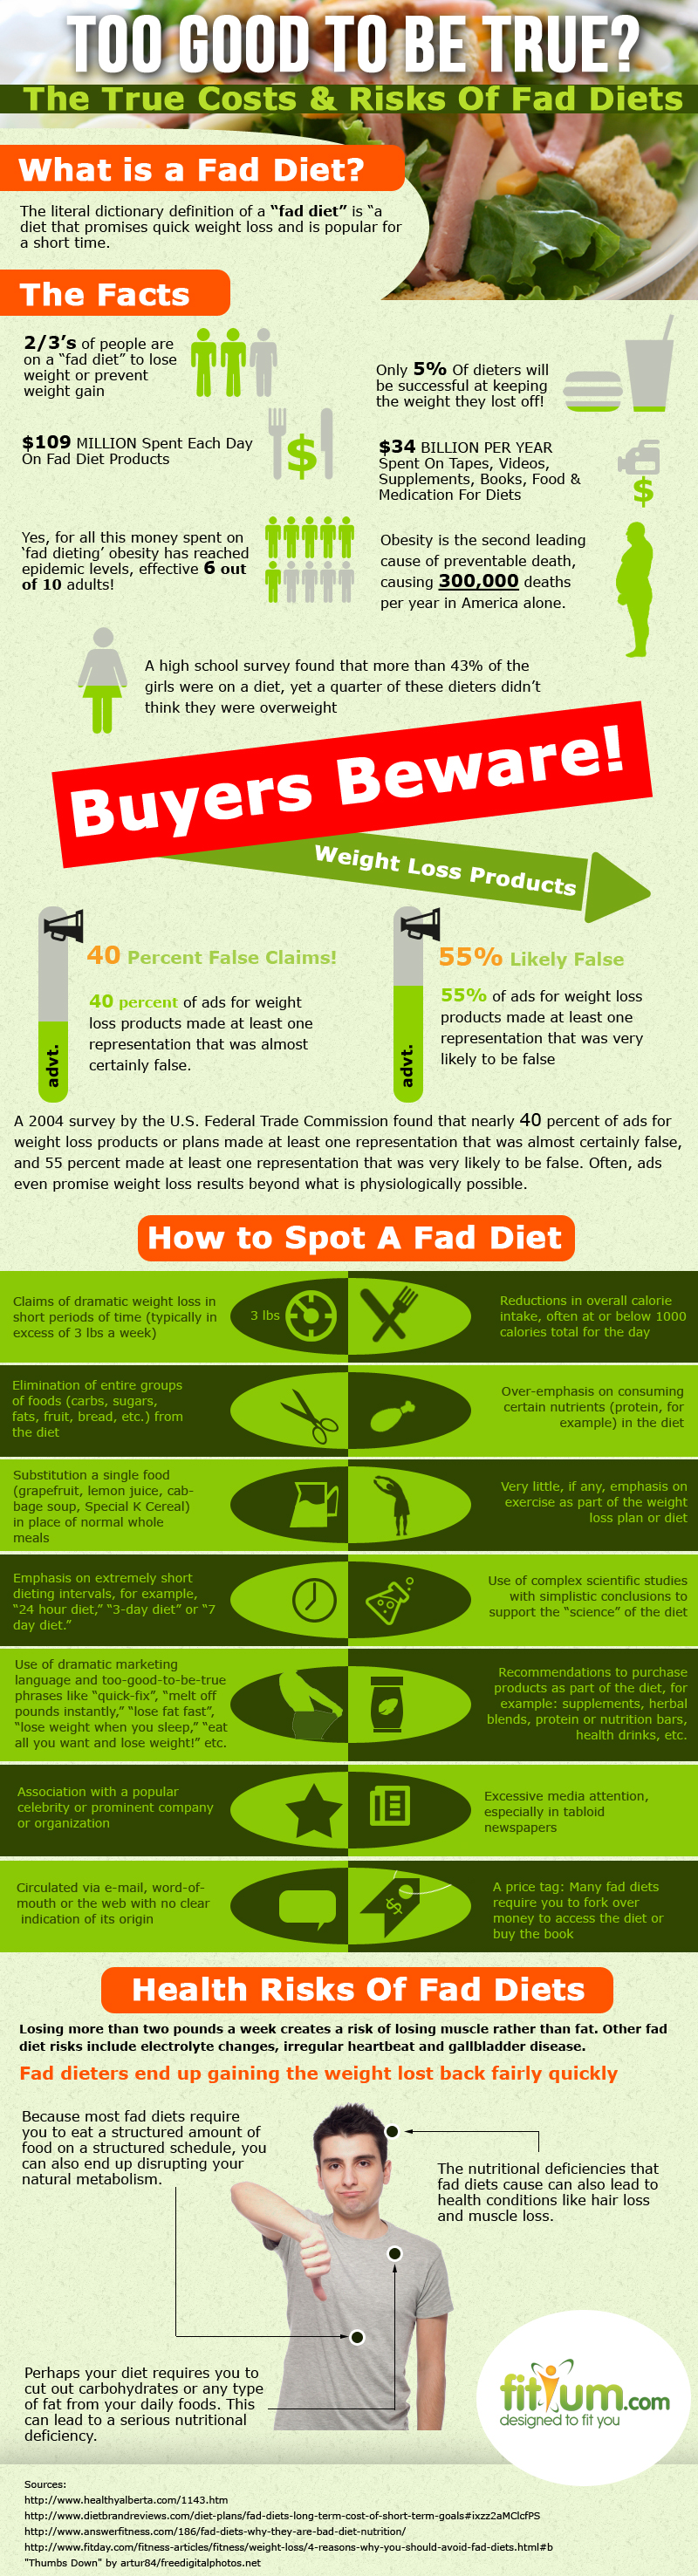 fad-diets-infographic-fitium